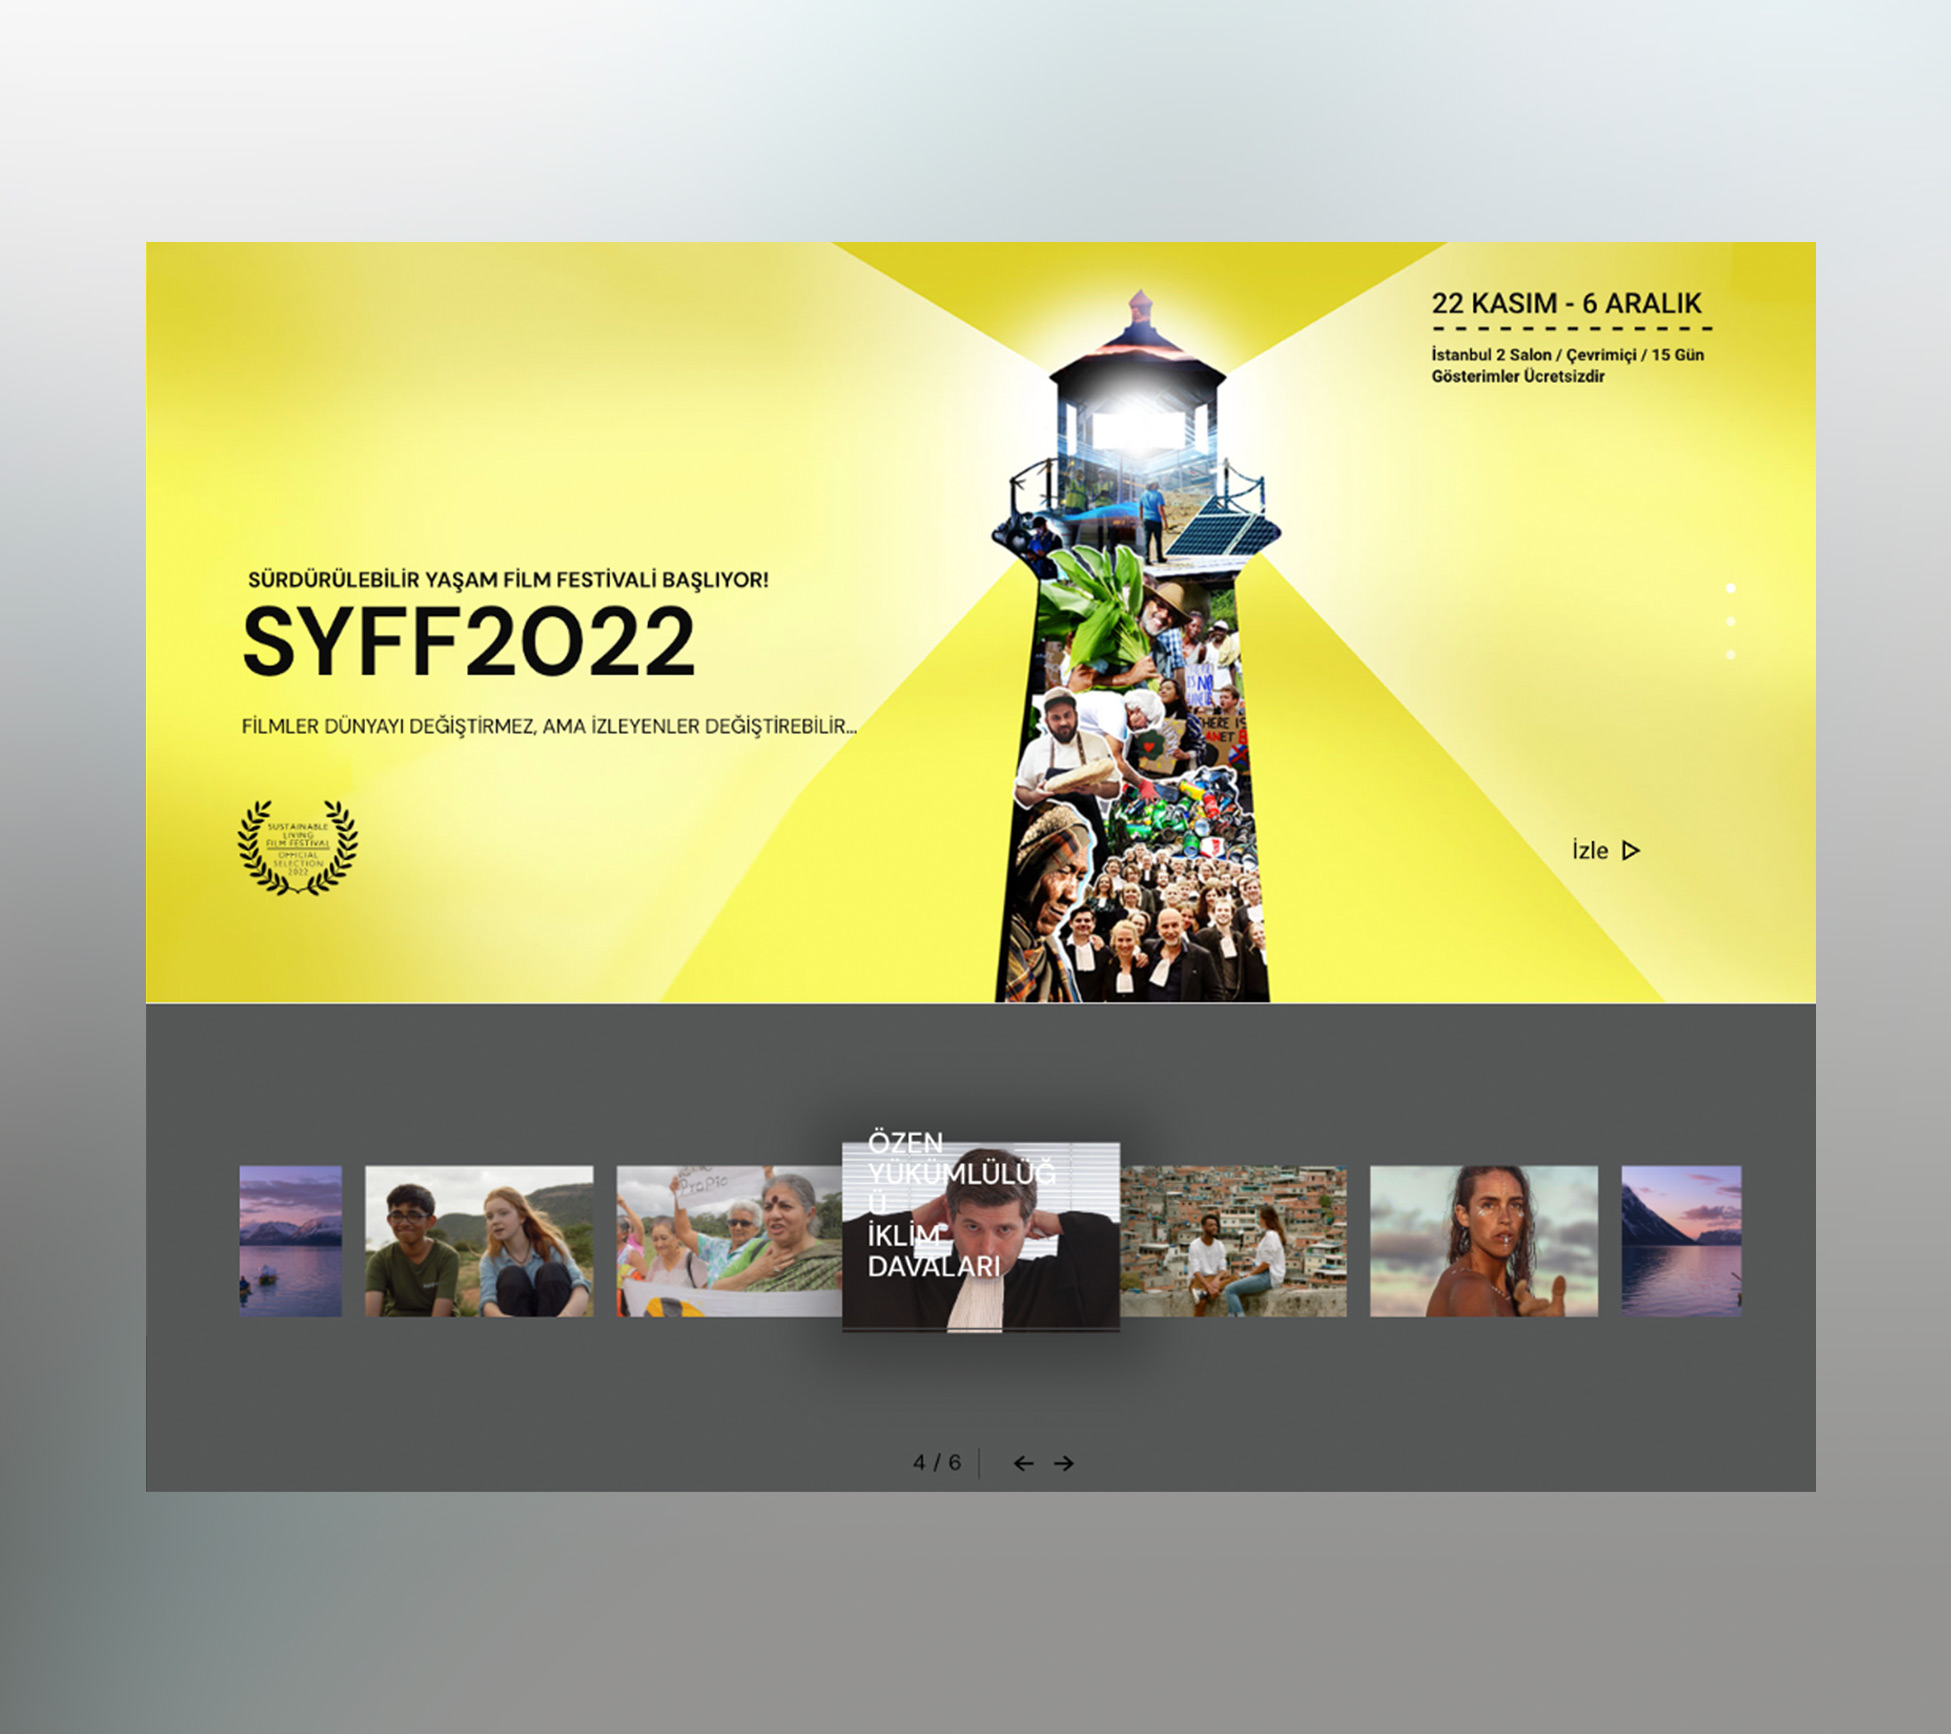 SYFF 2022